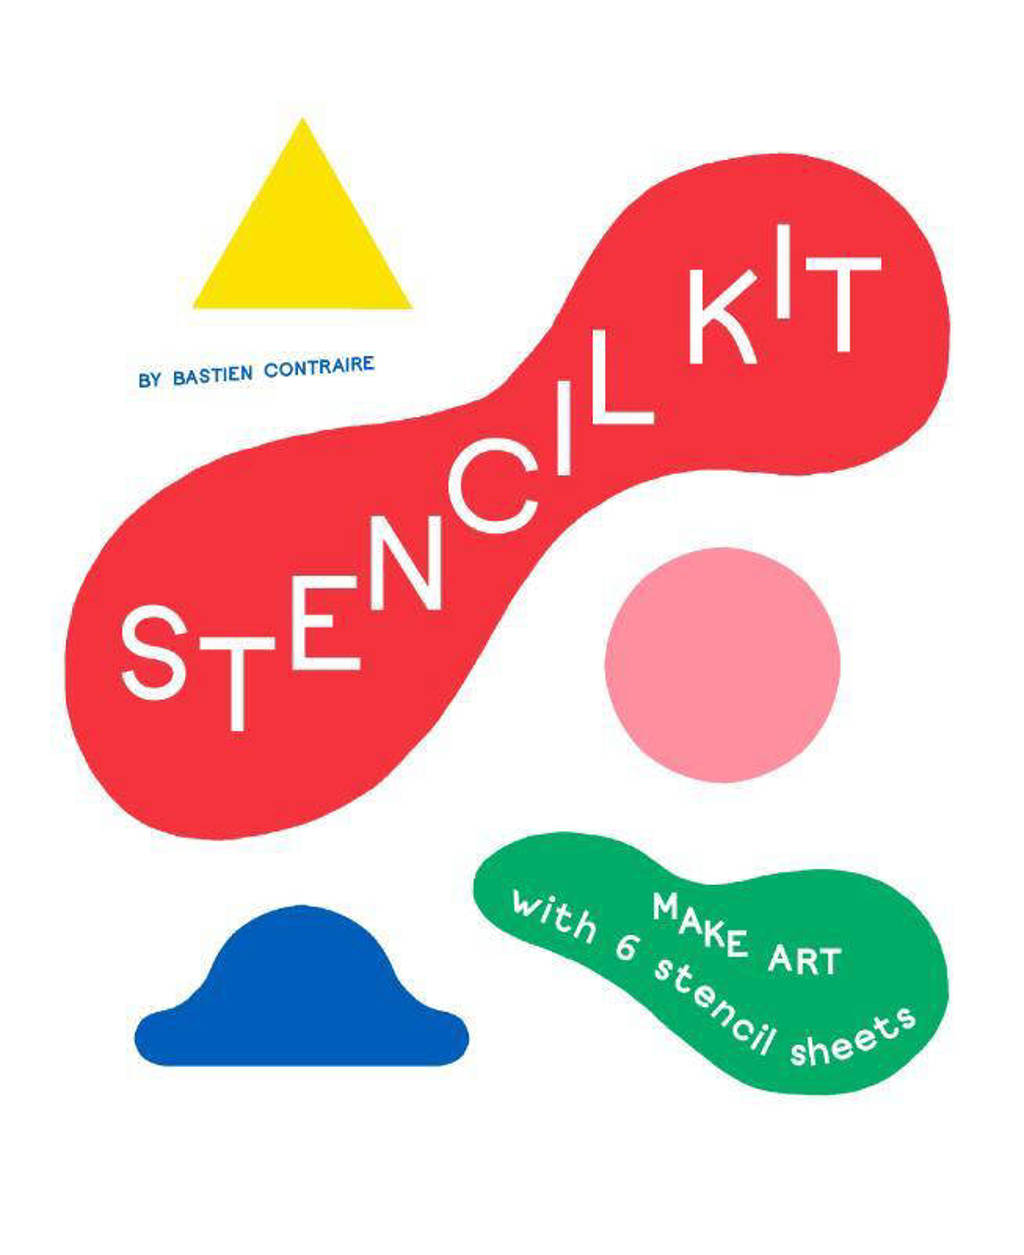 Stencil Kit - Bastien Contraire